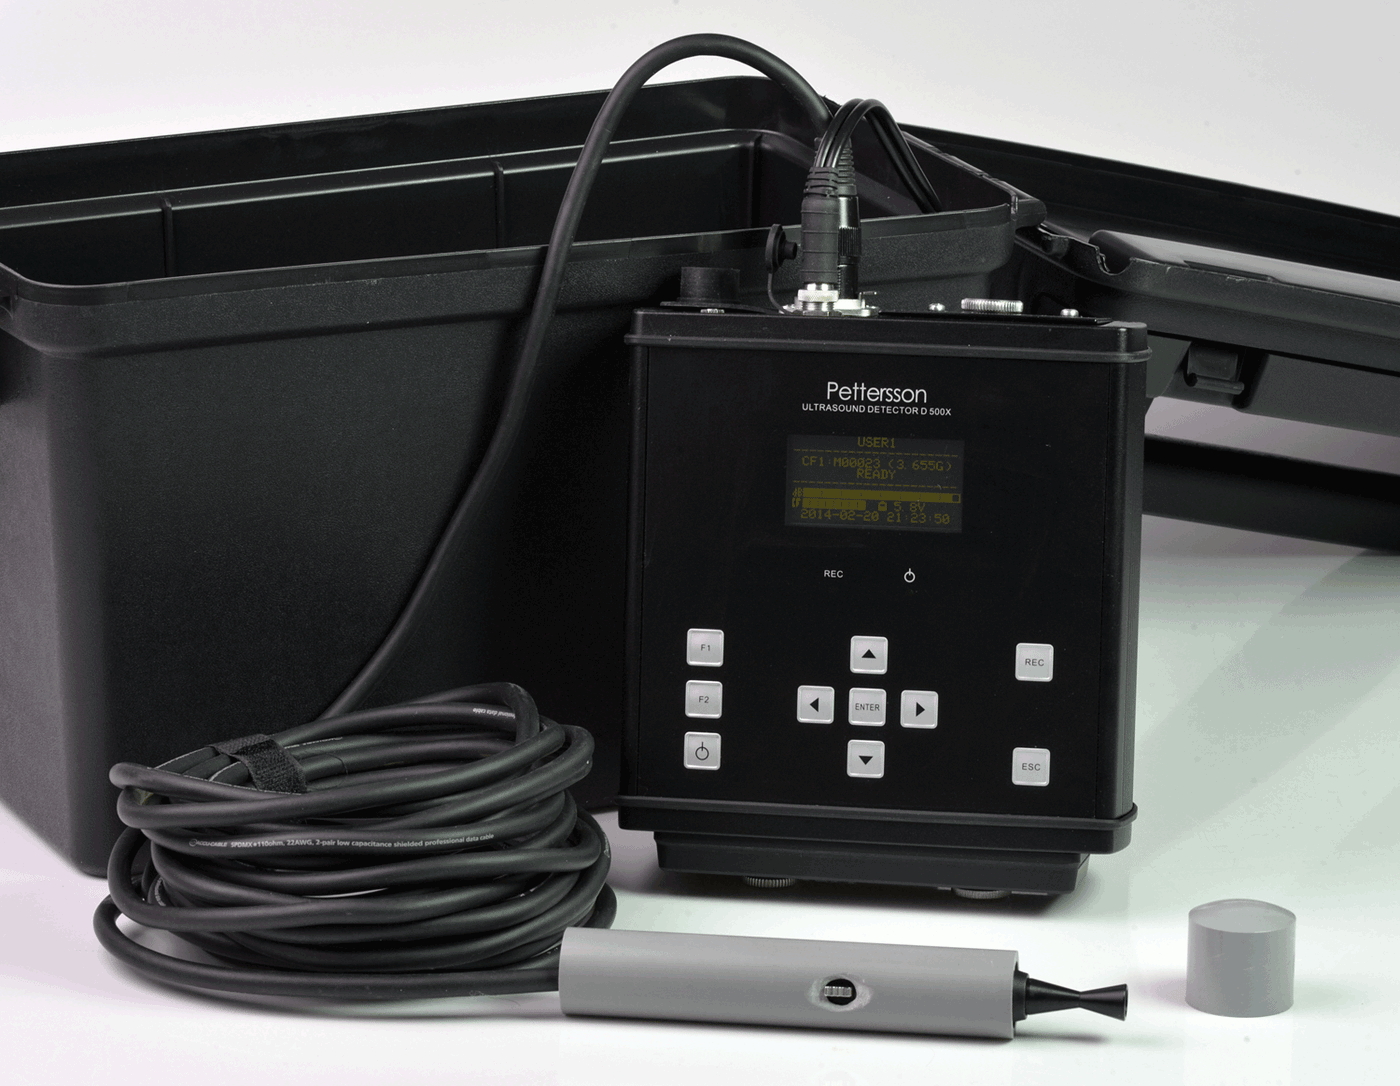 Compresseur digital programmable 12 V - 7,5 Ah - 96 W - 0,05 à 7